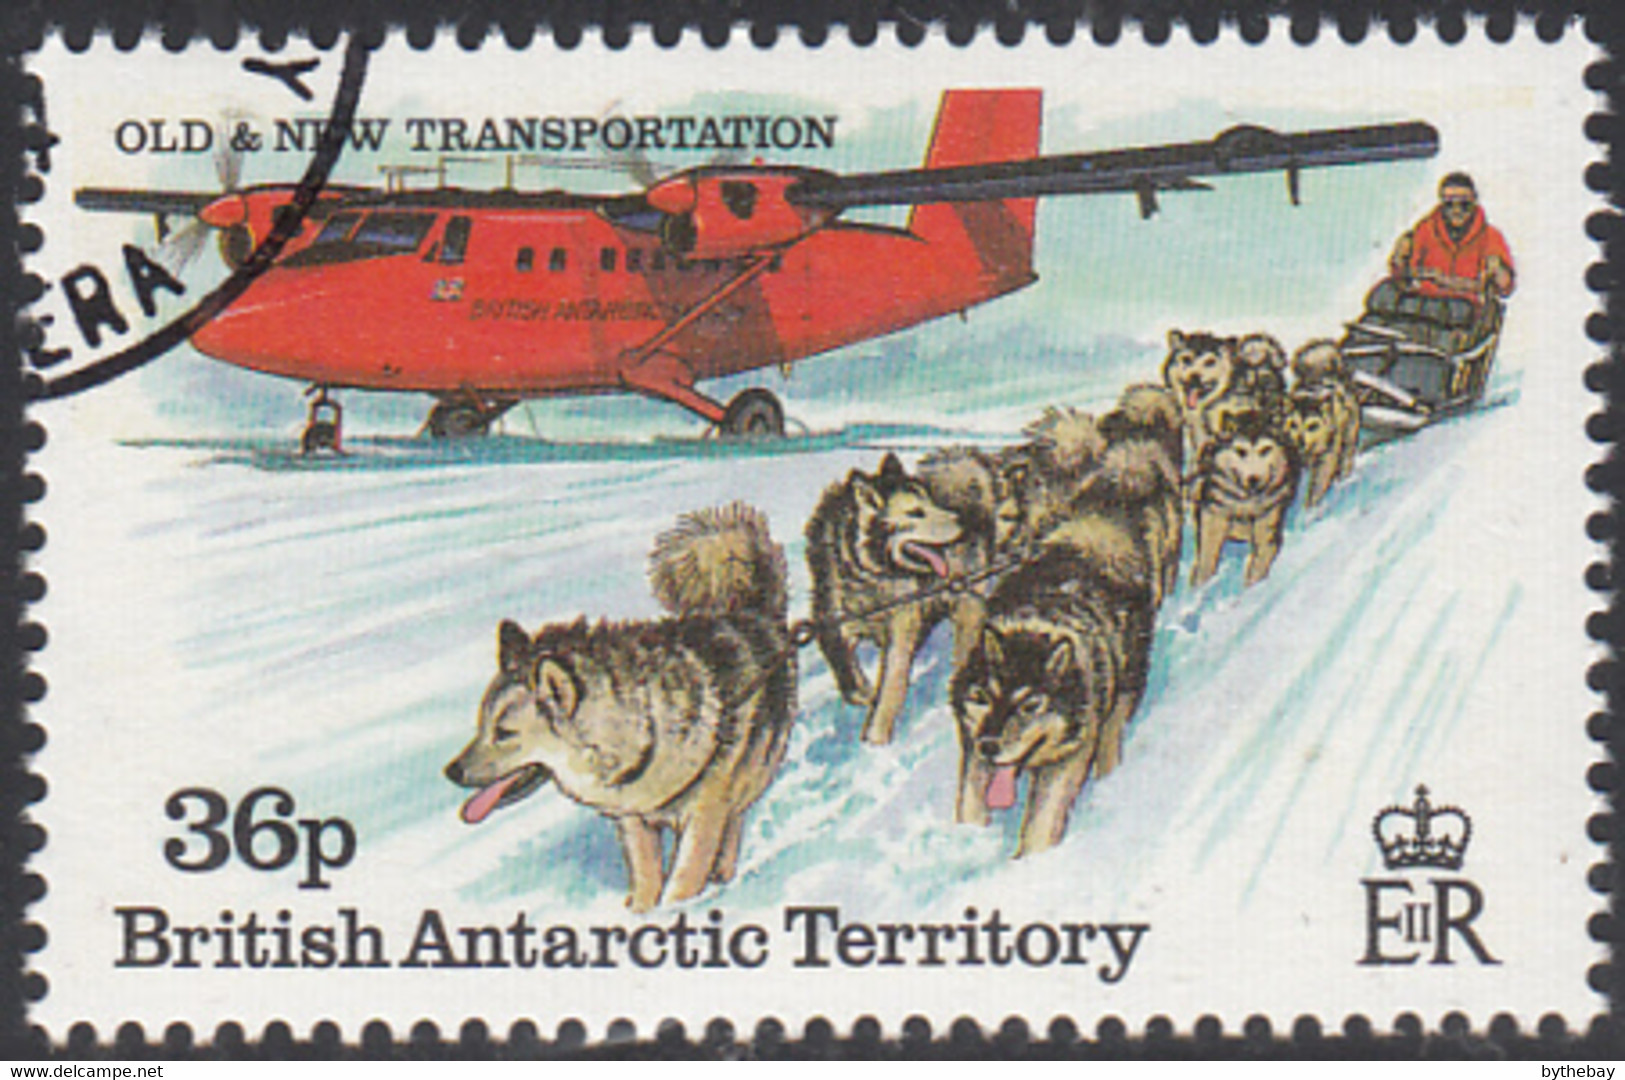 British Antarctic Territory 1994 Used Sc #221 36p Dogsled Team, DHC-6 Twin Otter - Usati